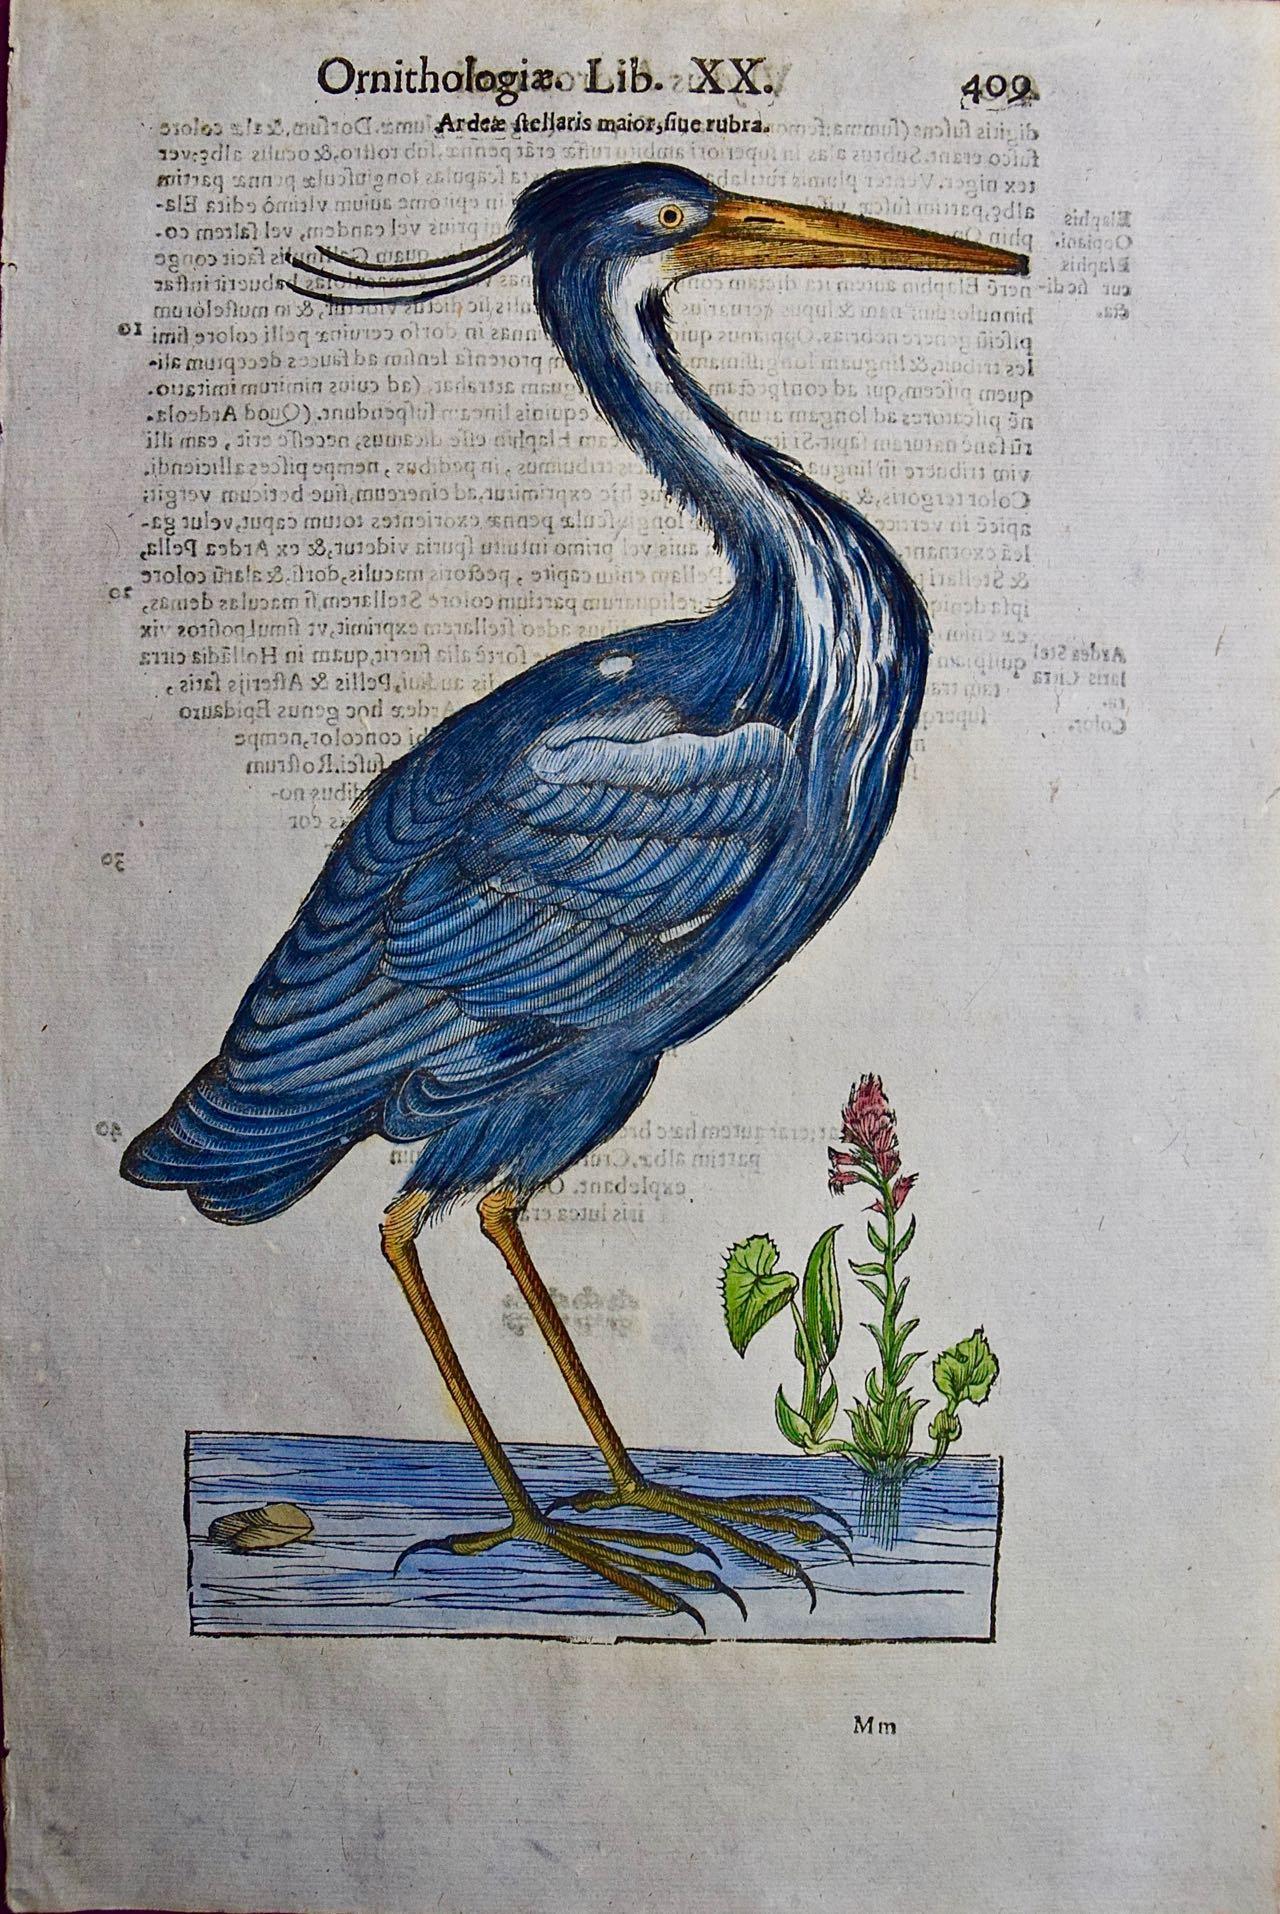 Ulisse Aldrovandi Animal Print - A 16th/17th Century Hand-colored Engraving of a Blue Heron Bird by Aldrovandi